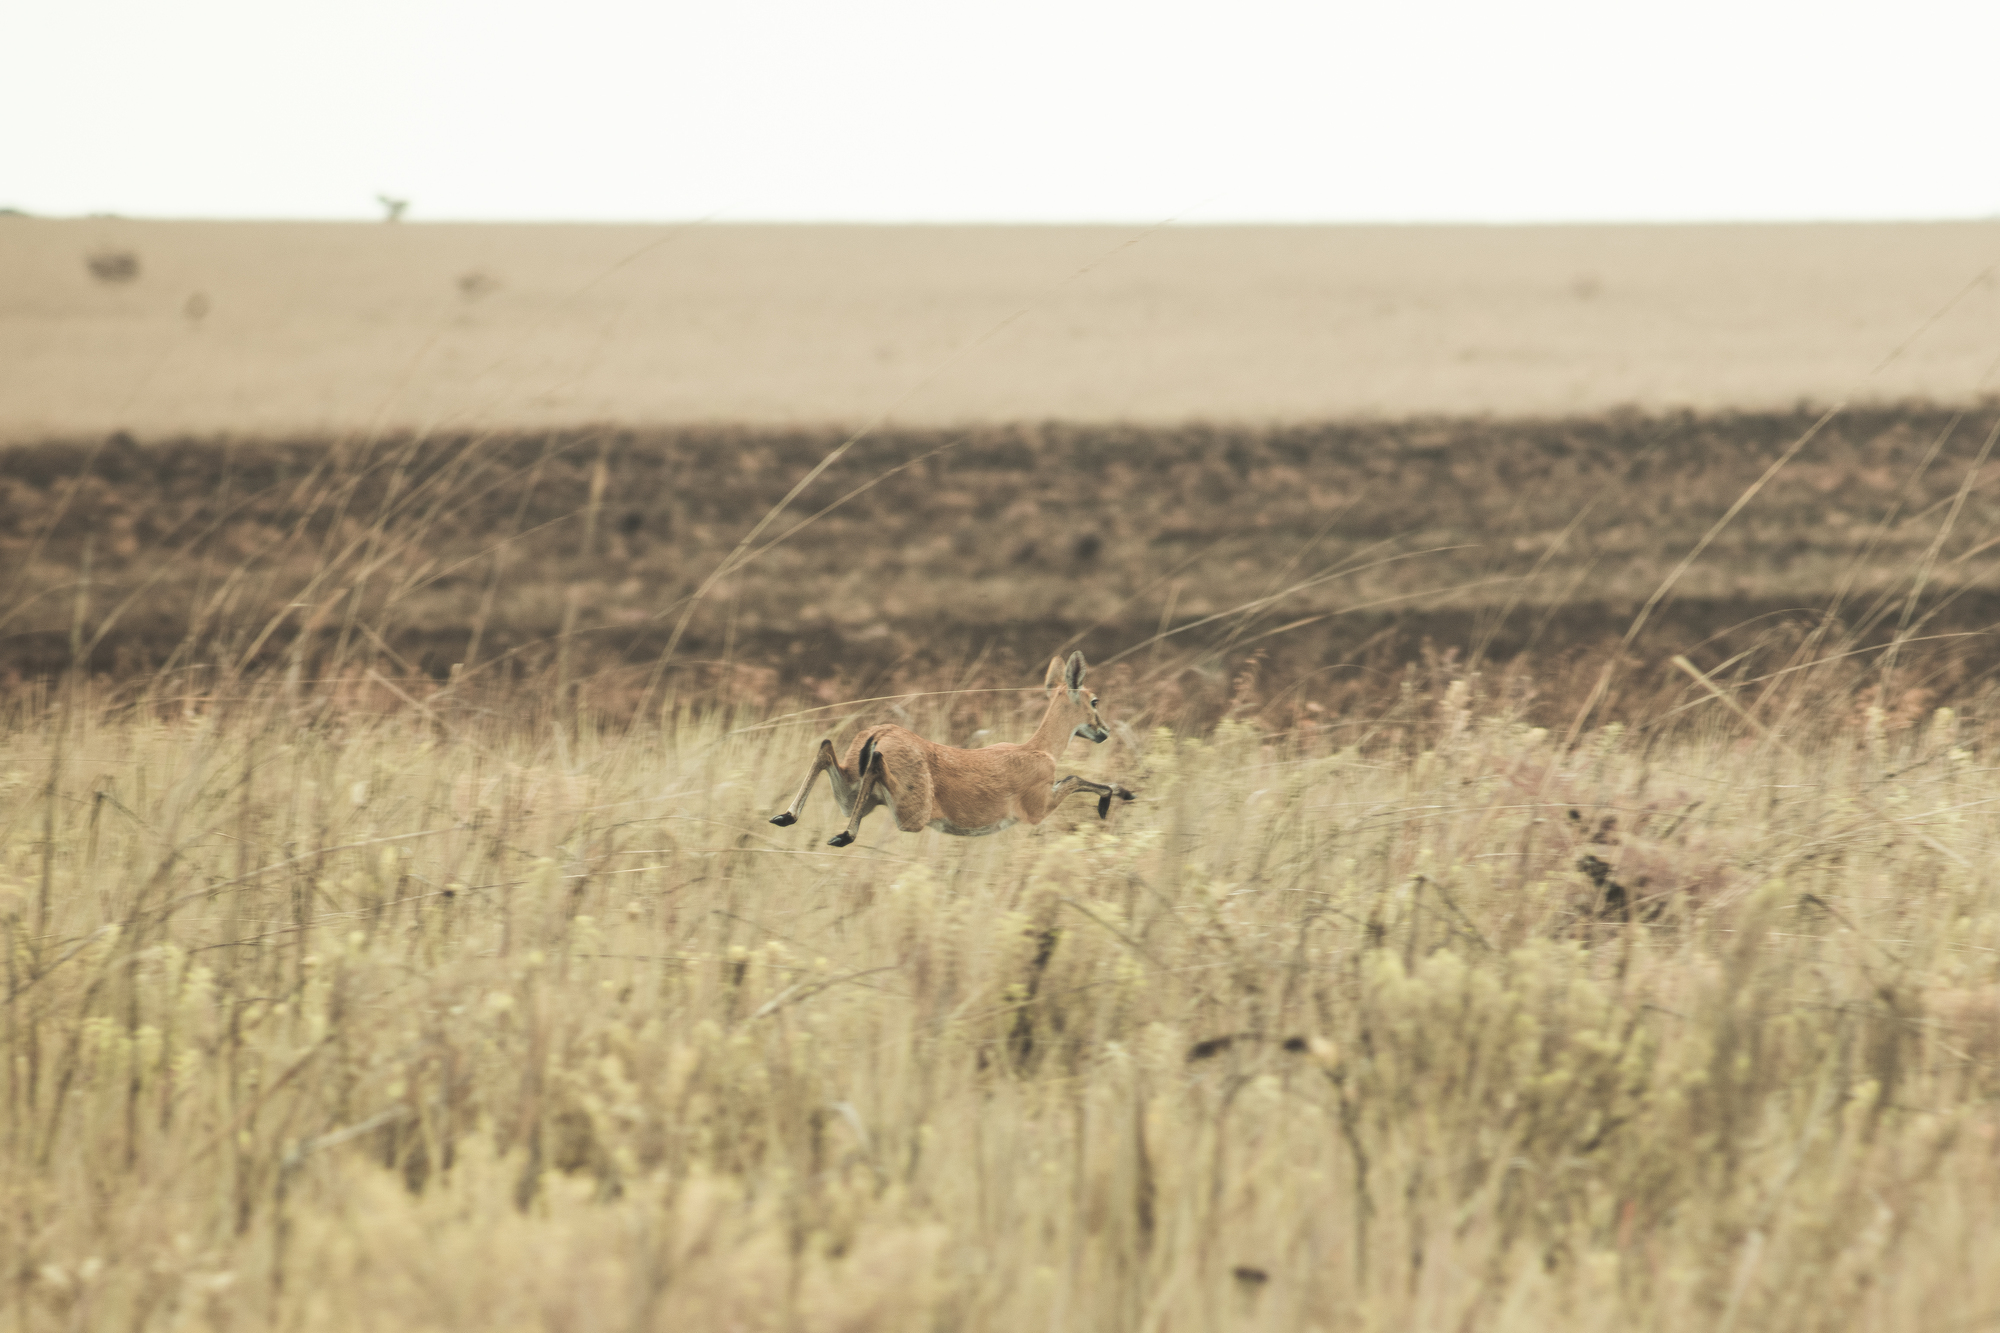 Image courtesy of Pongo - Antilope (Cobe de Roseaux / Reedbuck) at Lusinga Plateau - Upemba National Park